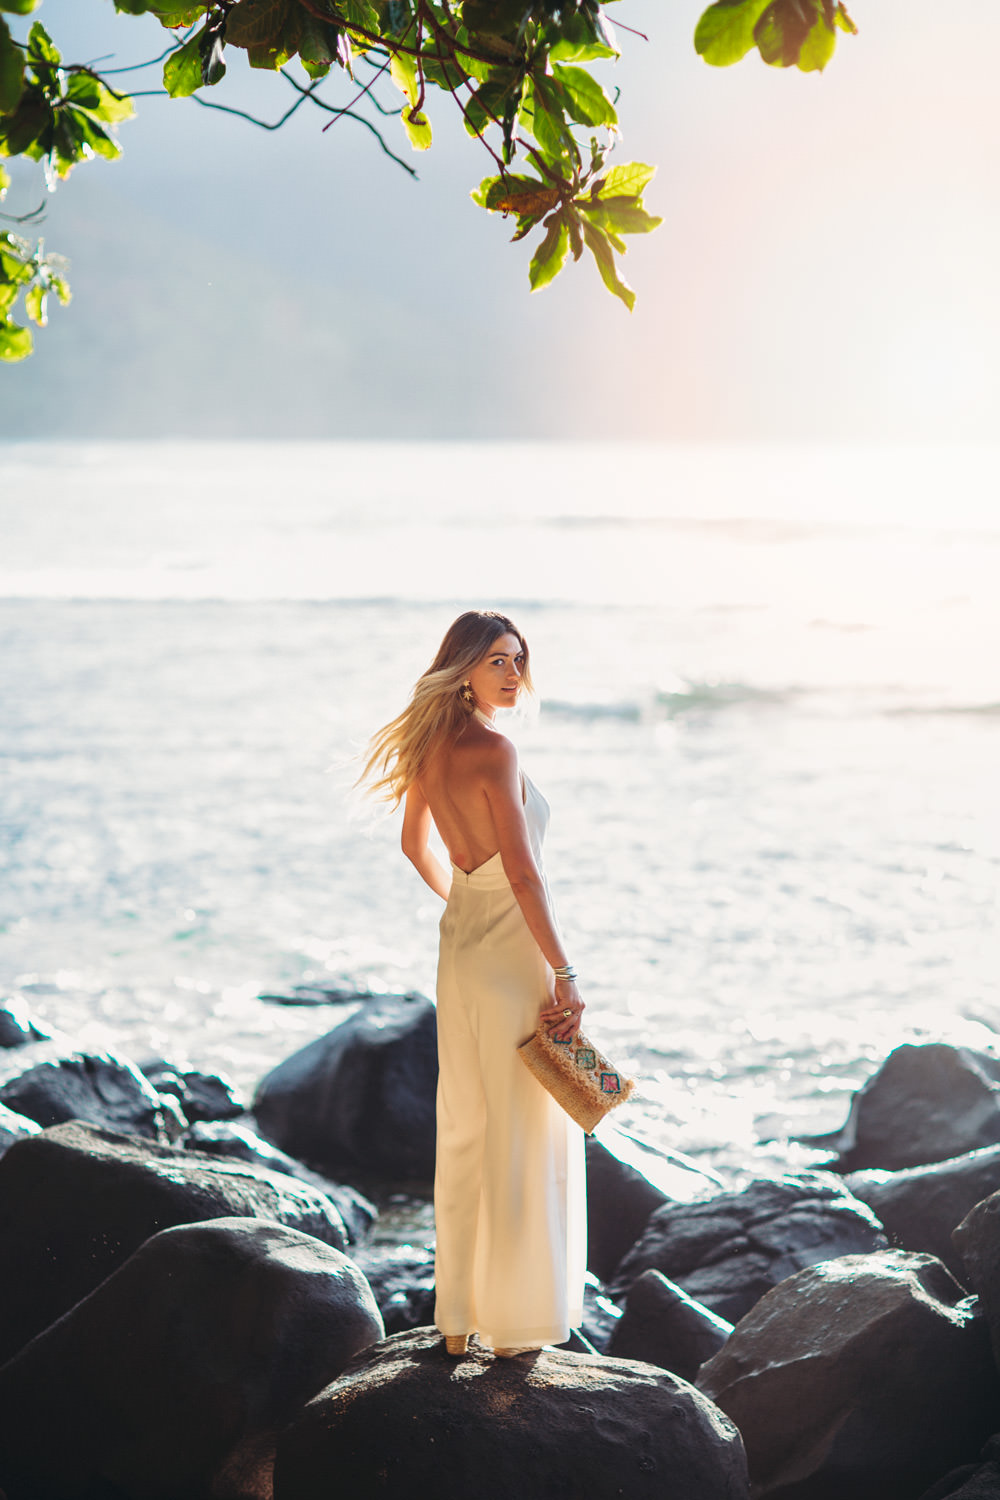 Caitlin Lindquist of Dash of Darling celebrates her fourth wedding anniversary at the beautiful St. Regis Princeville Kauai beach resort